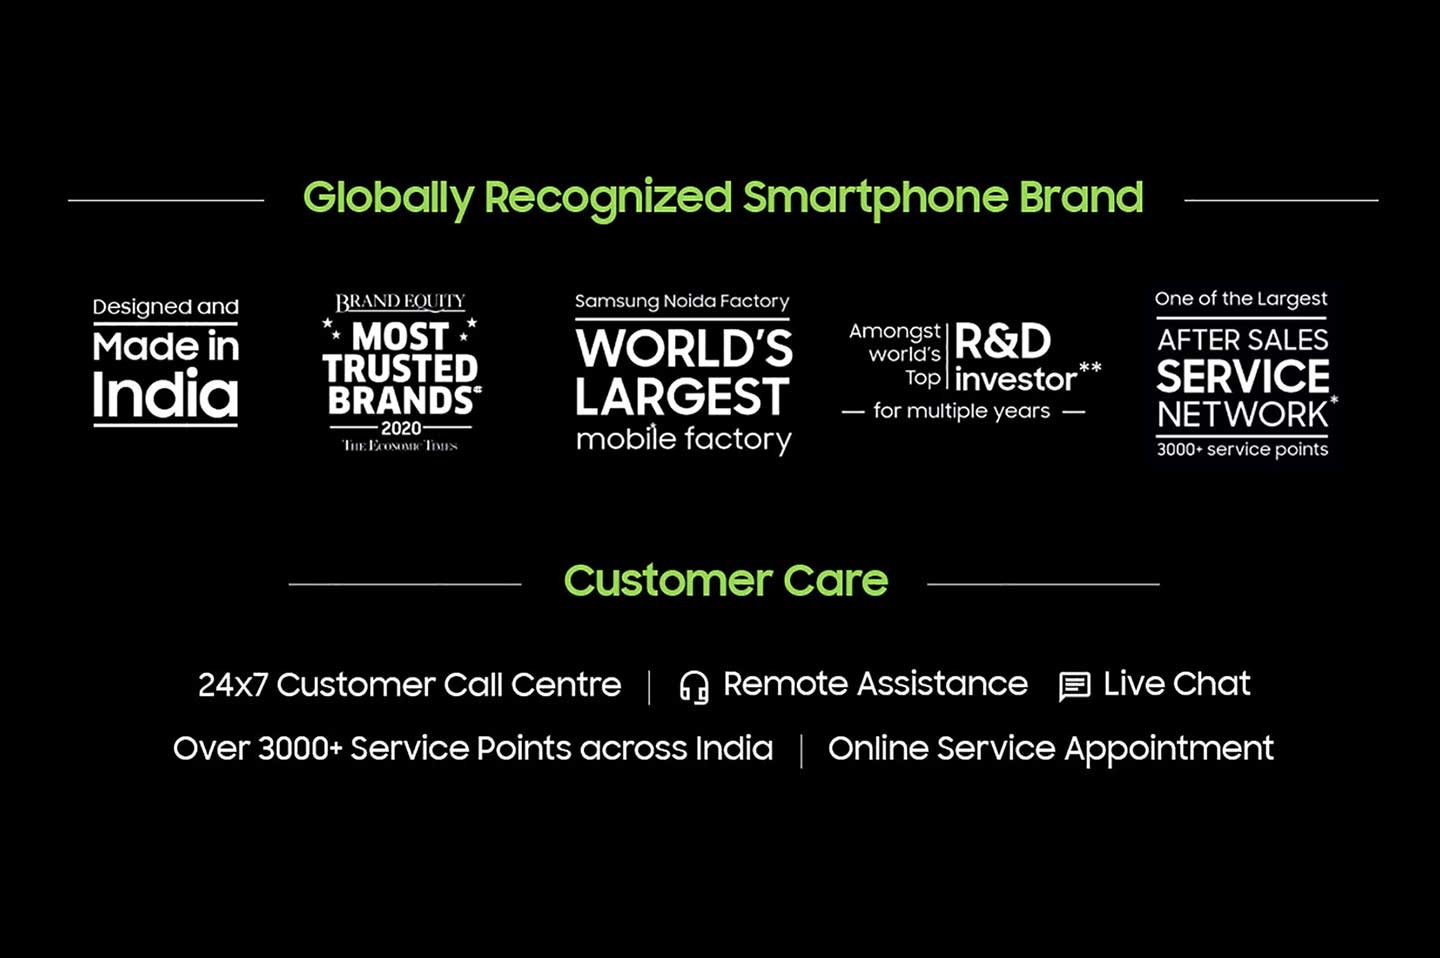 Globally recognized smartphones brand